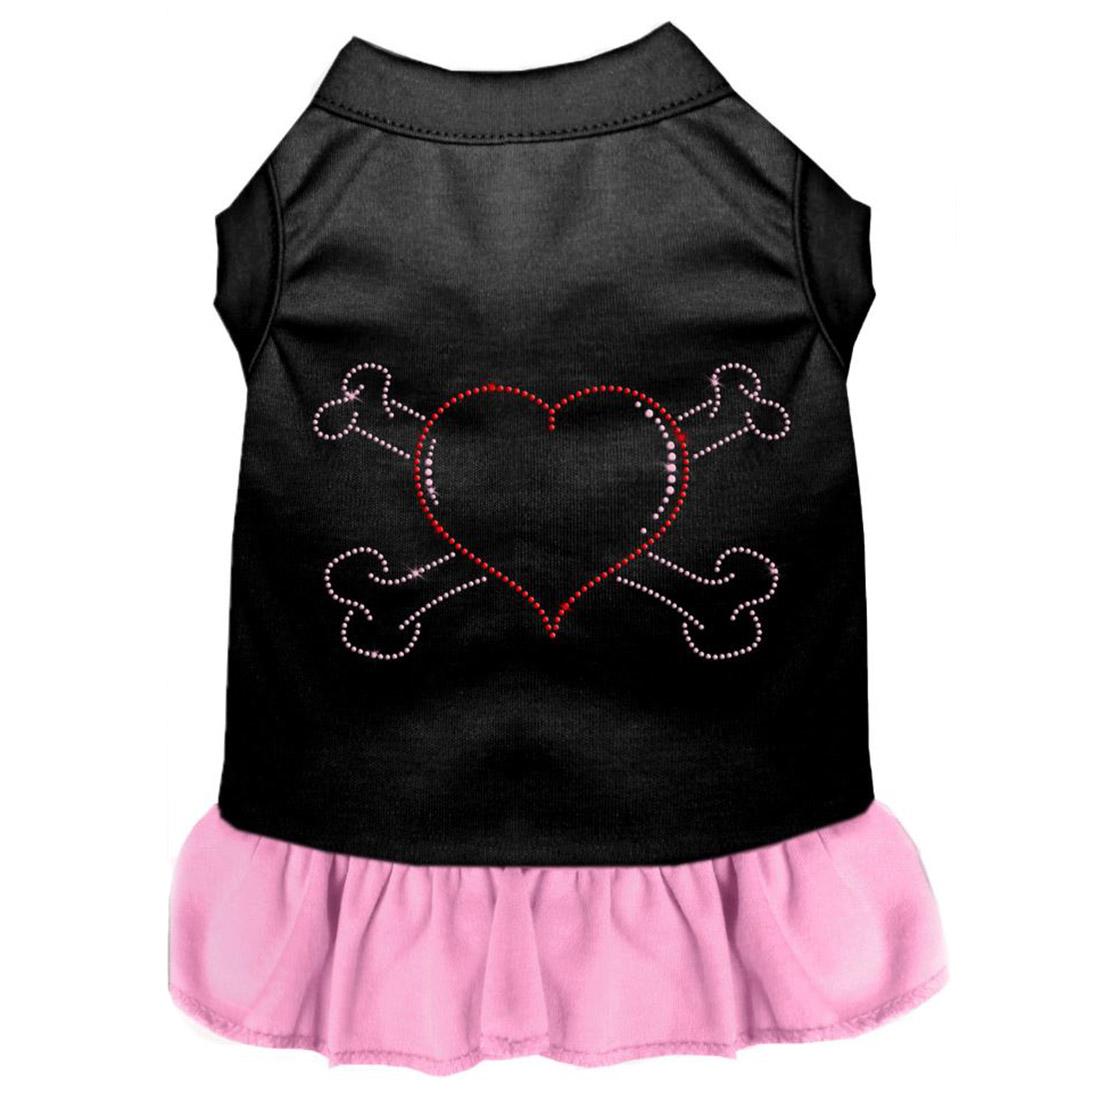 Rhinestone Heart and Crossbones Dog Dress - Black with Light Pink 